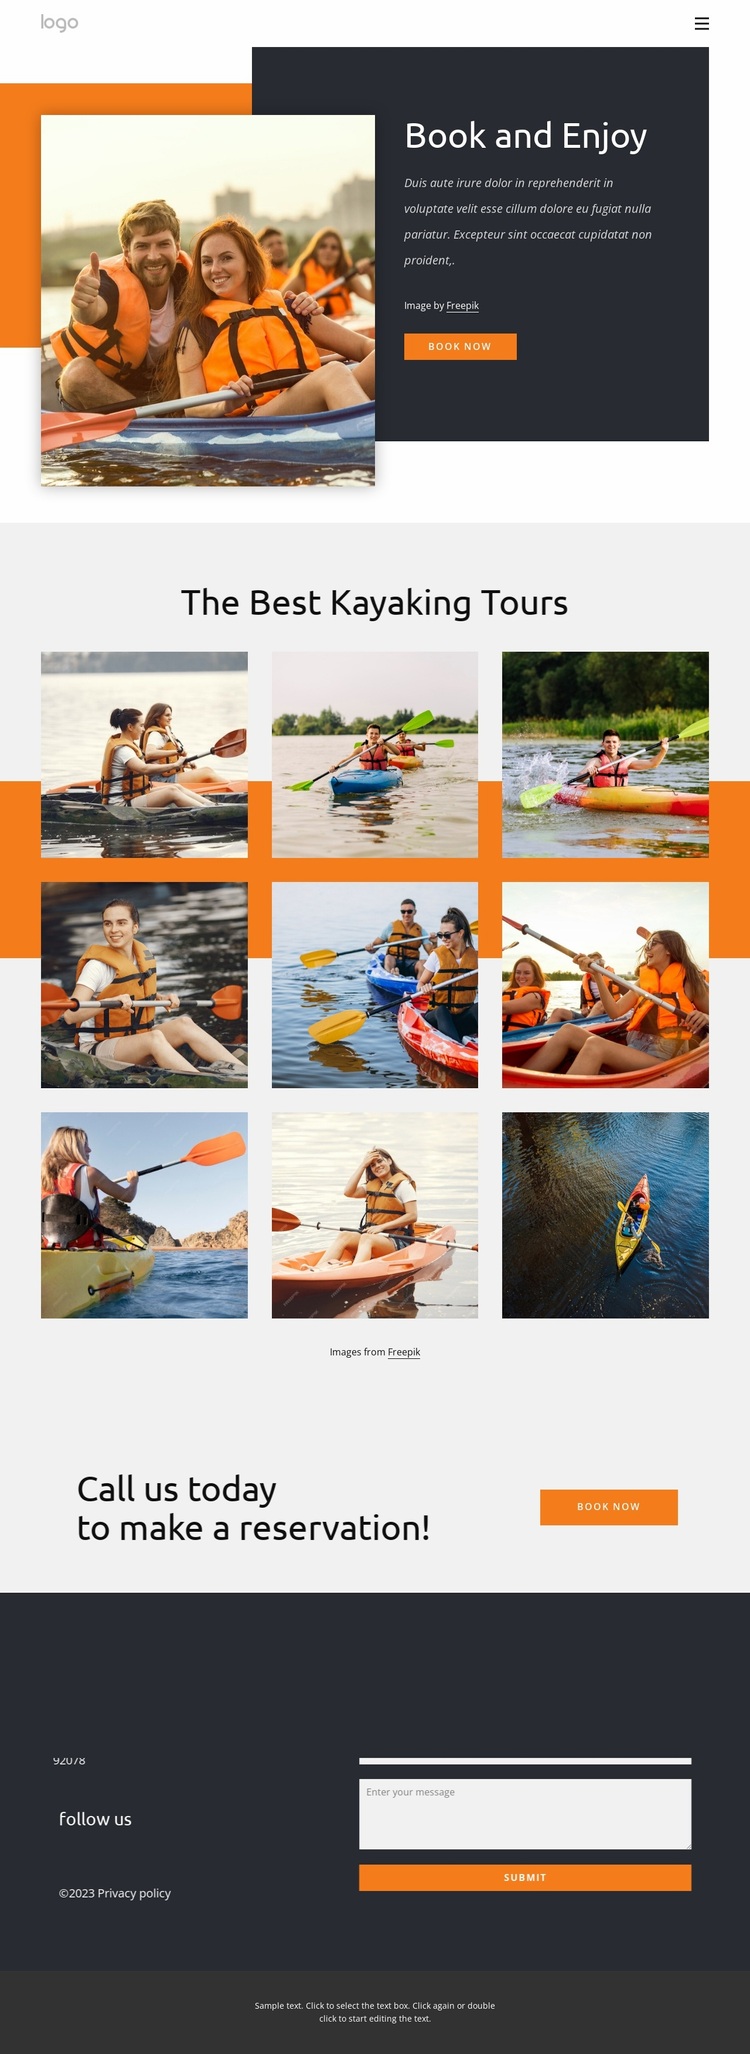 Kayaking tours and holidays Website Design